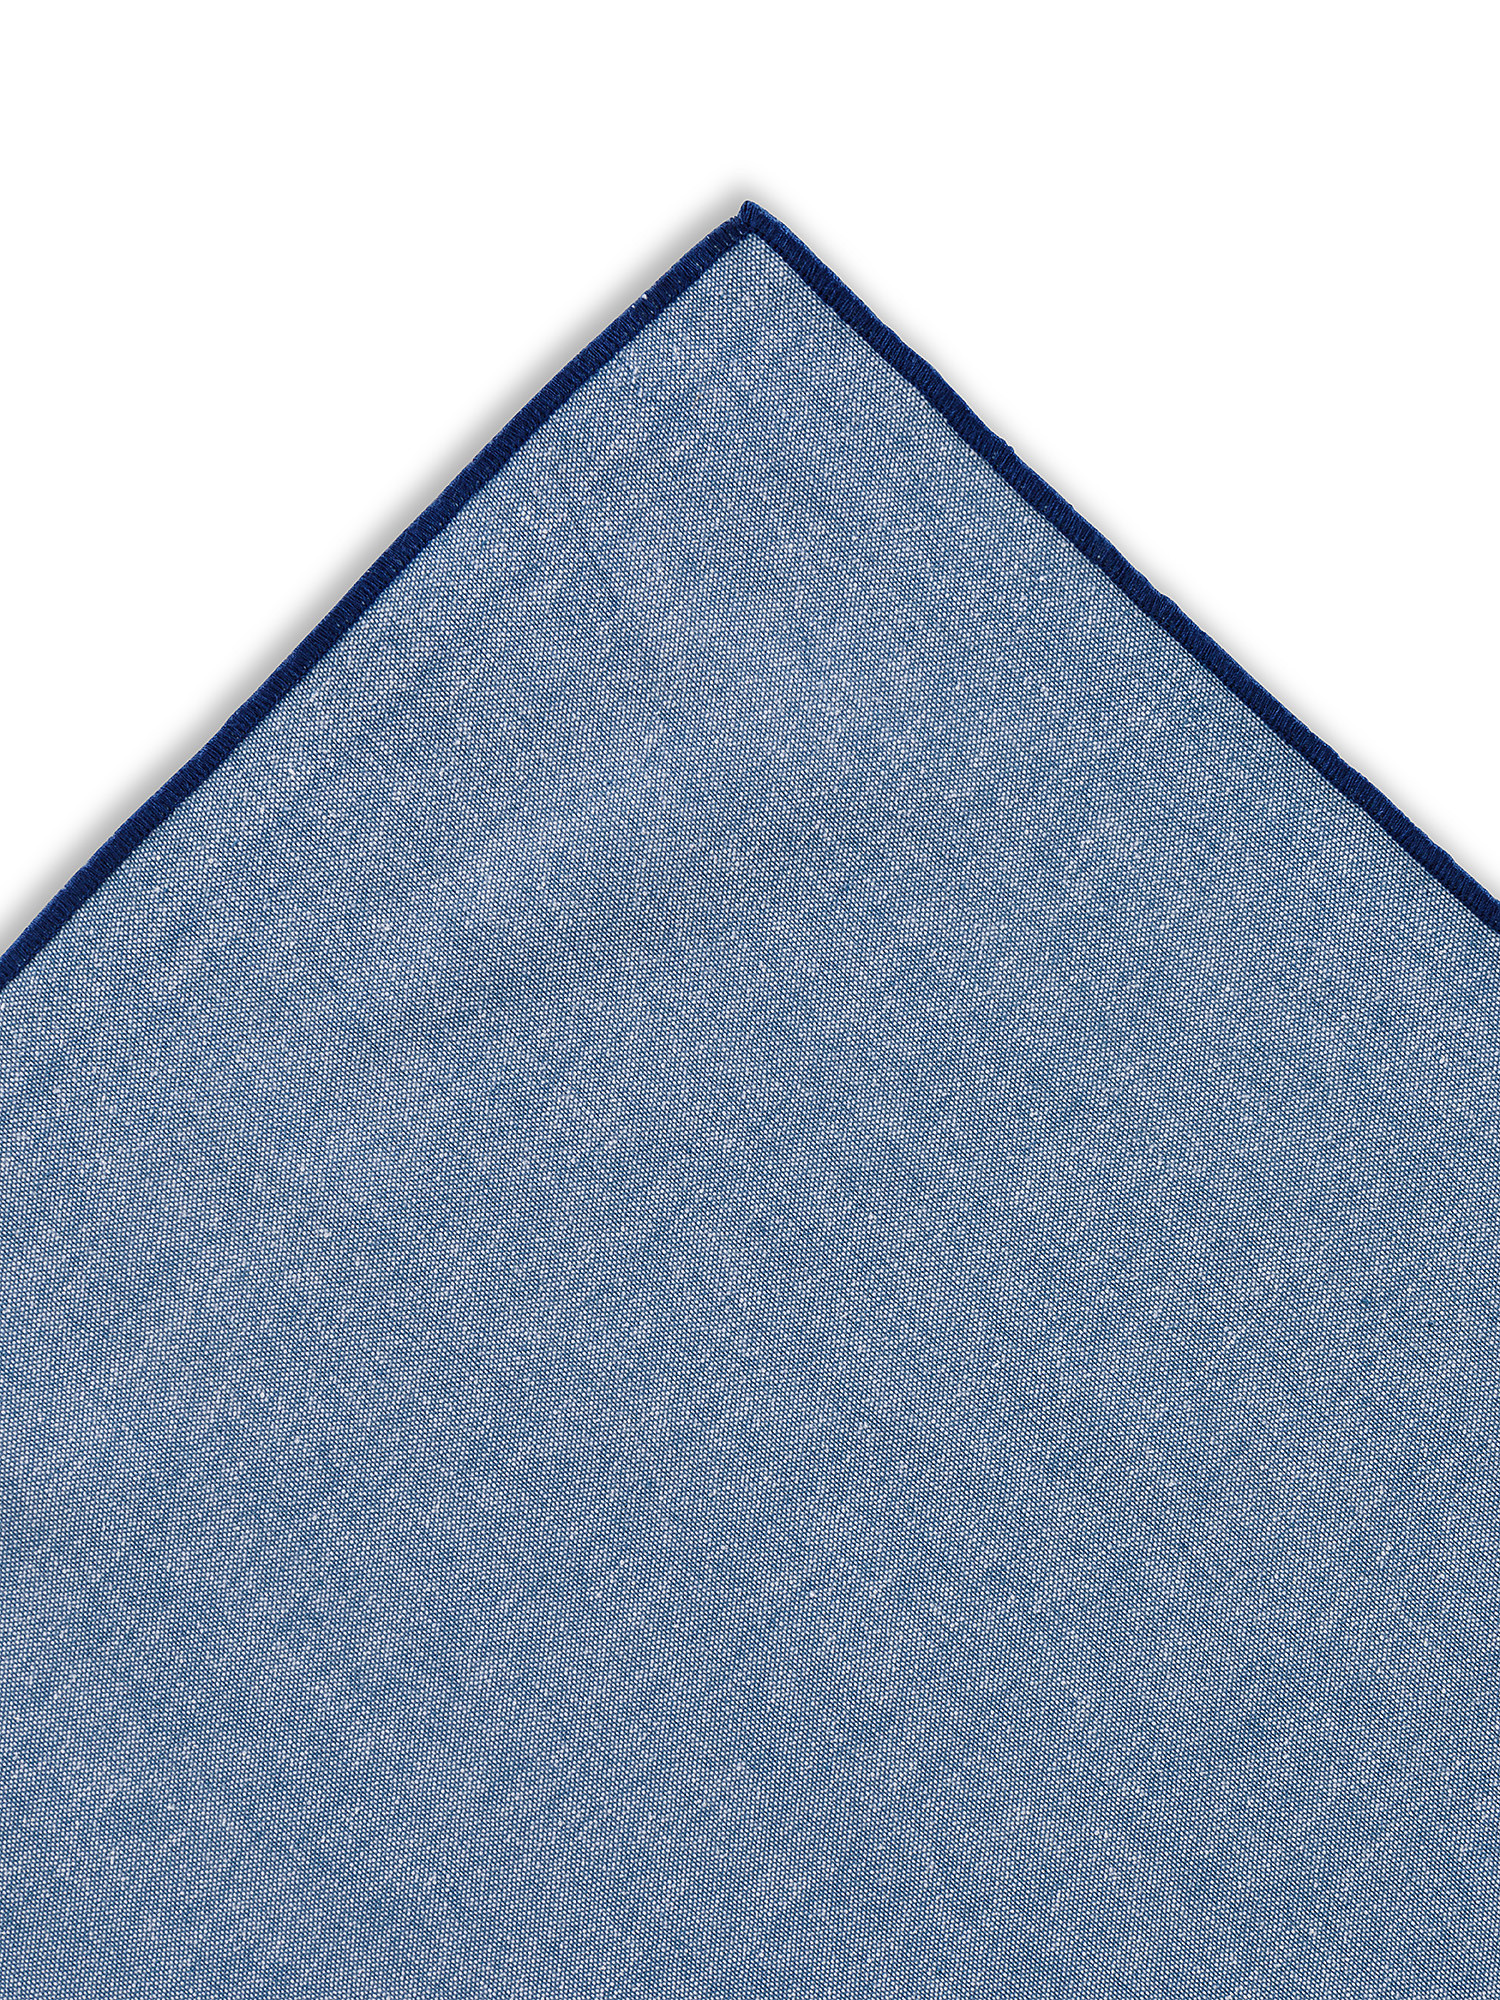 Centrotavola cotone chambré orlo a contrasto, Blu, large image number 1